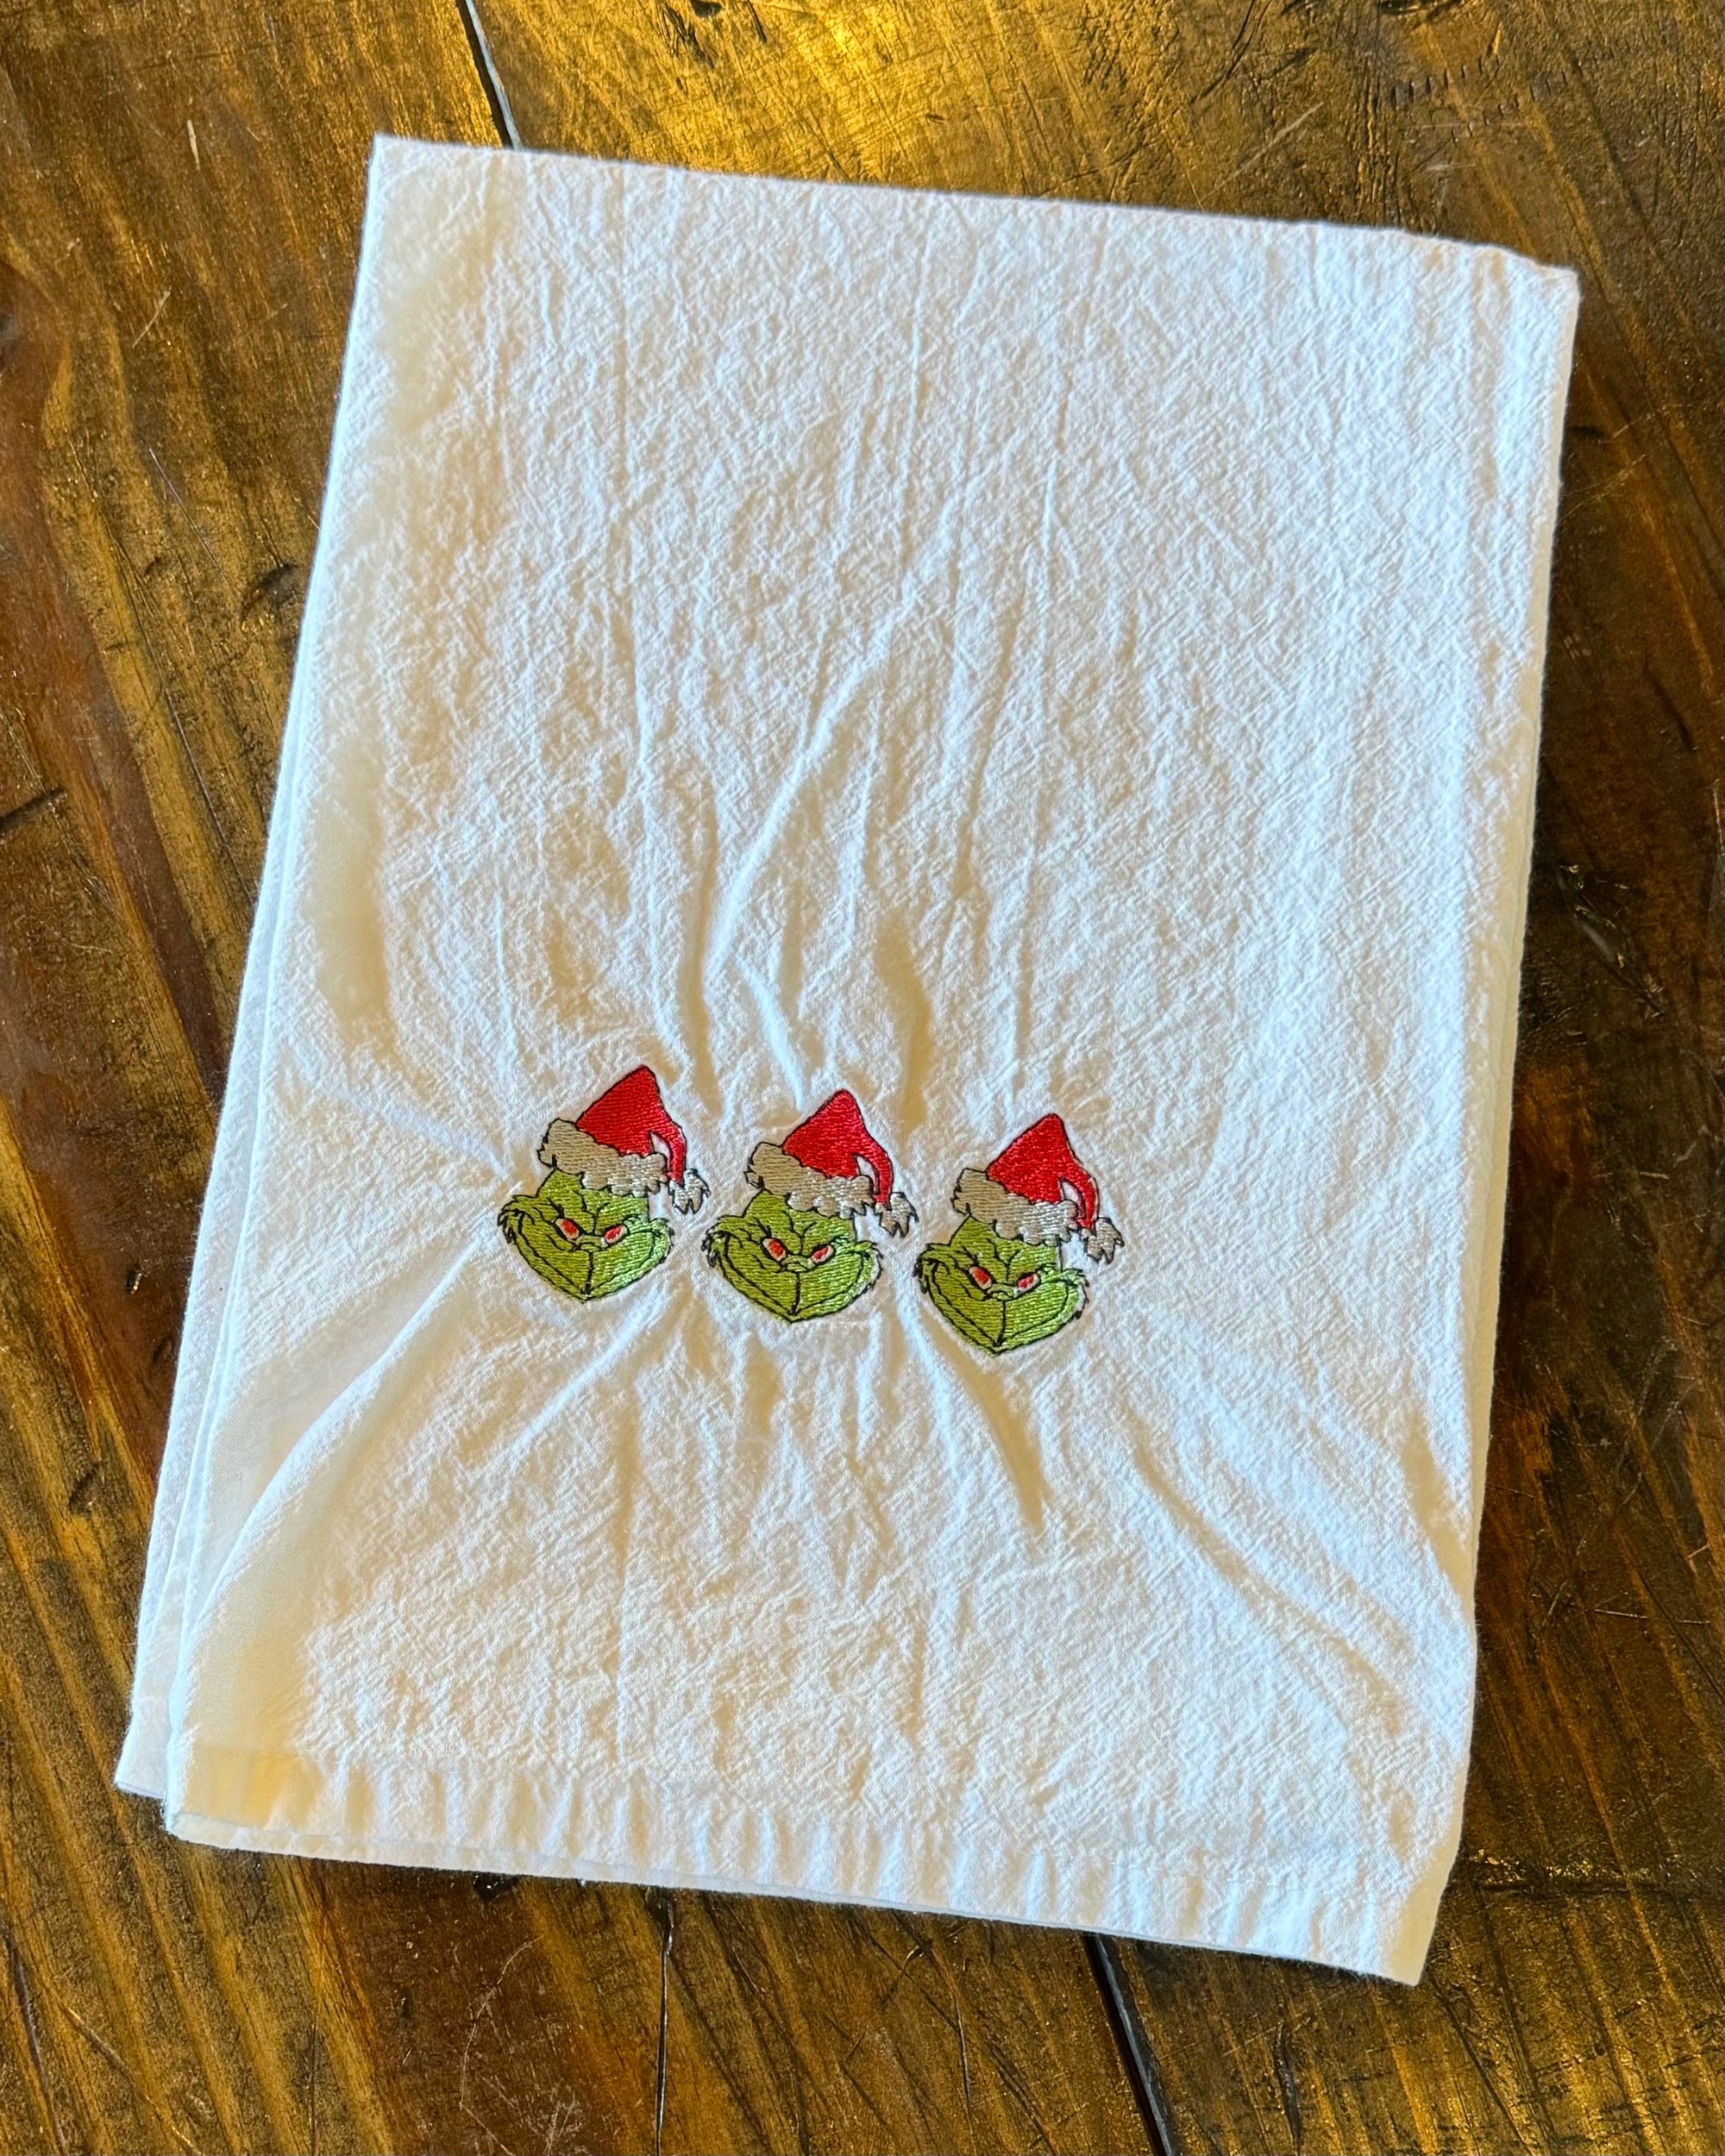 Flour Sack Dish Towels